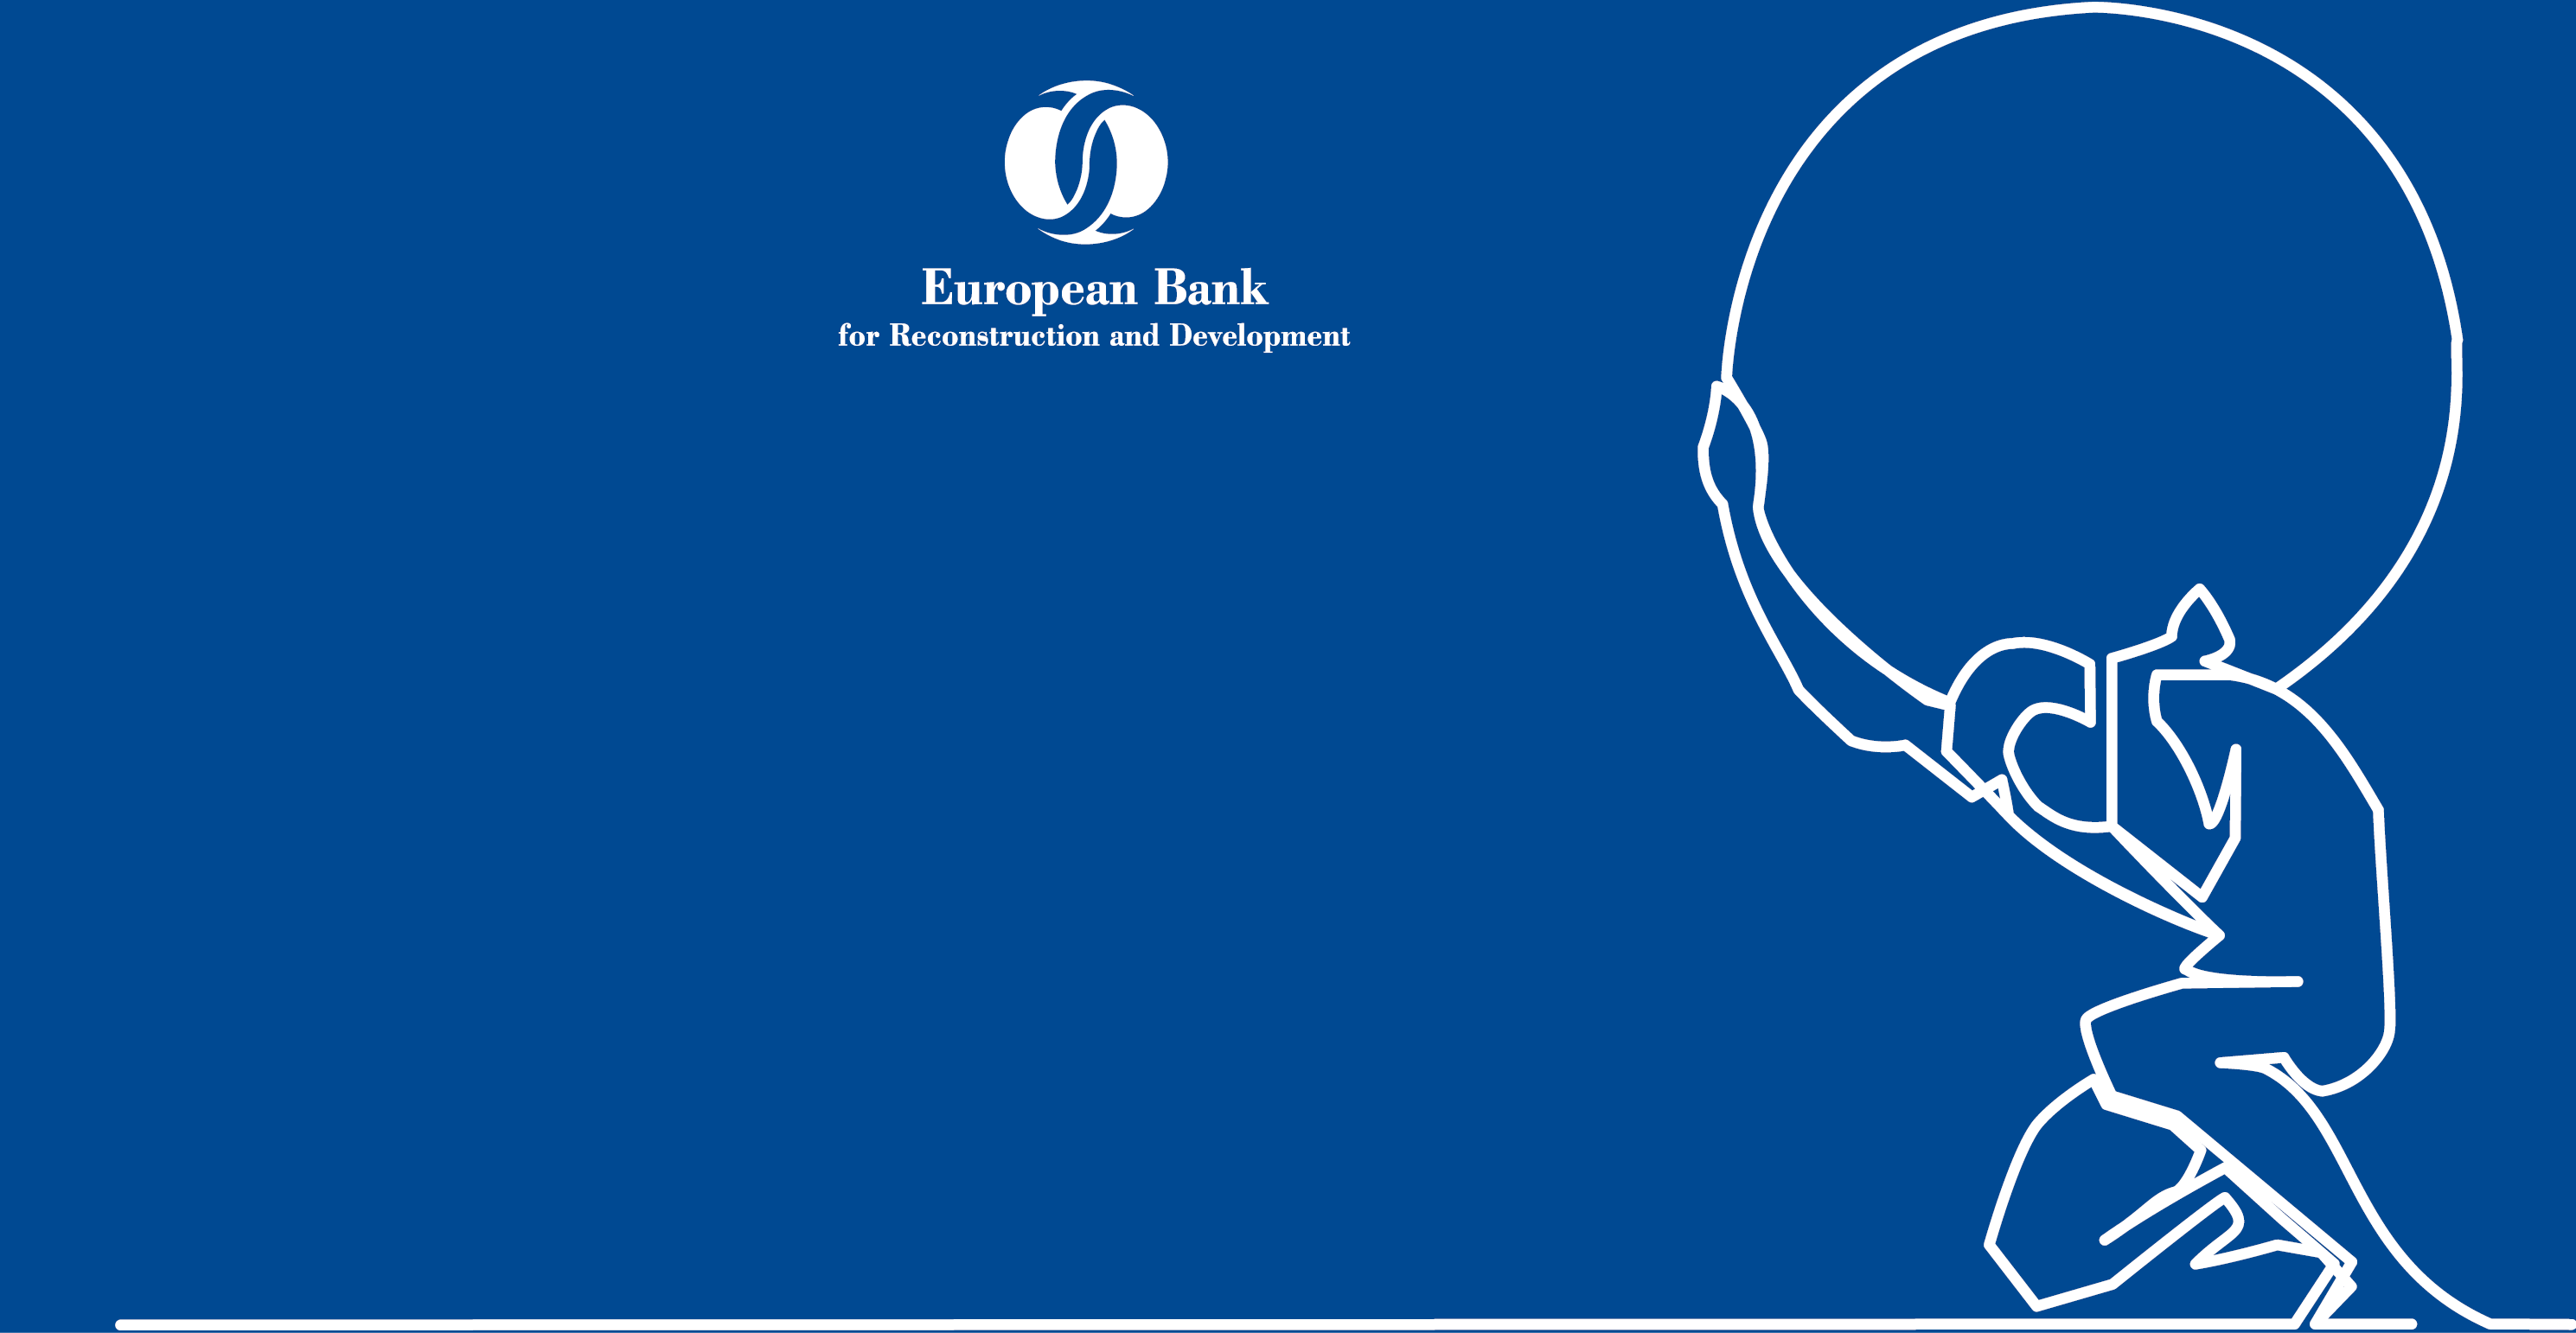 The European Bank for Reconstruction & Development